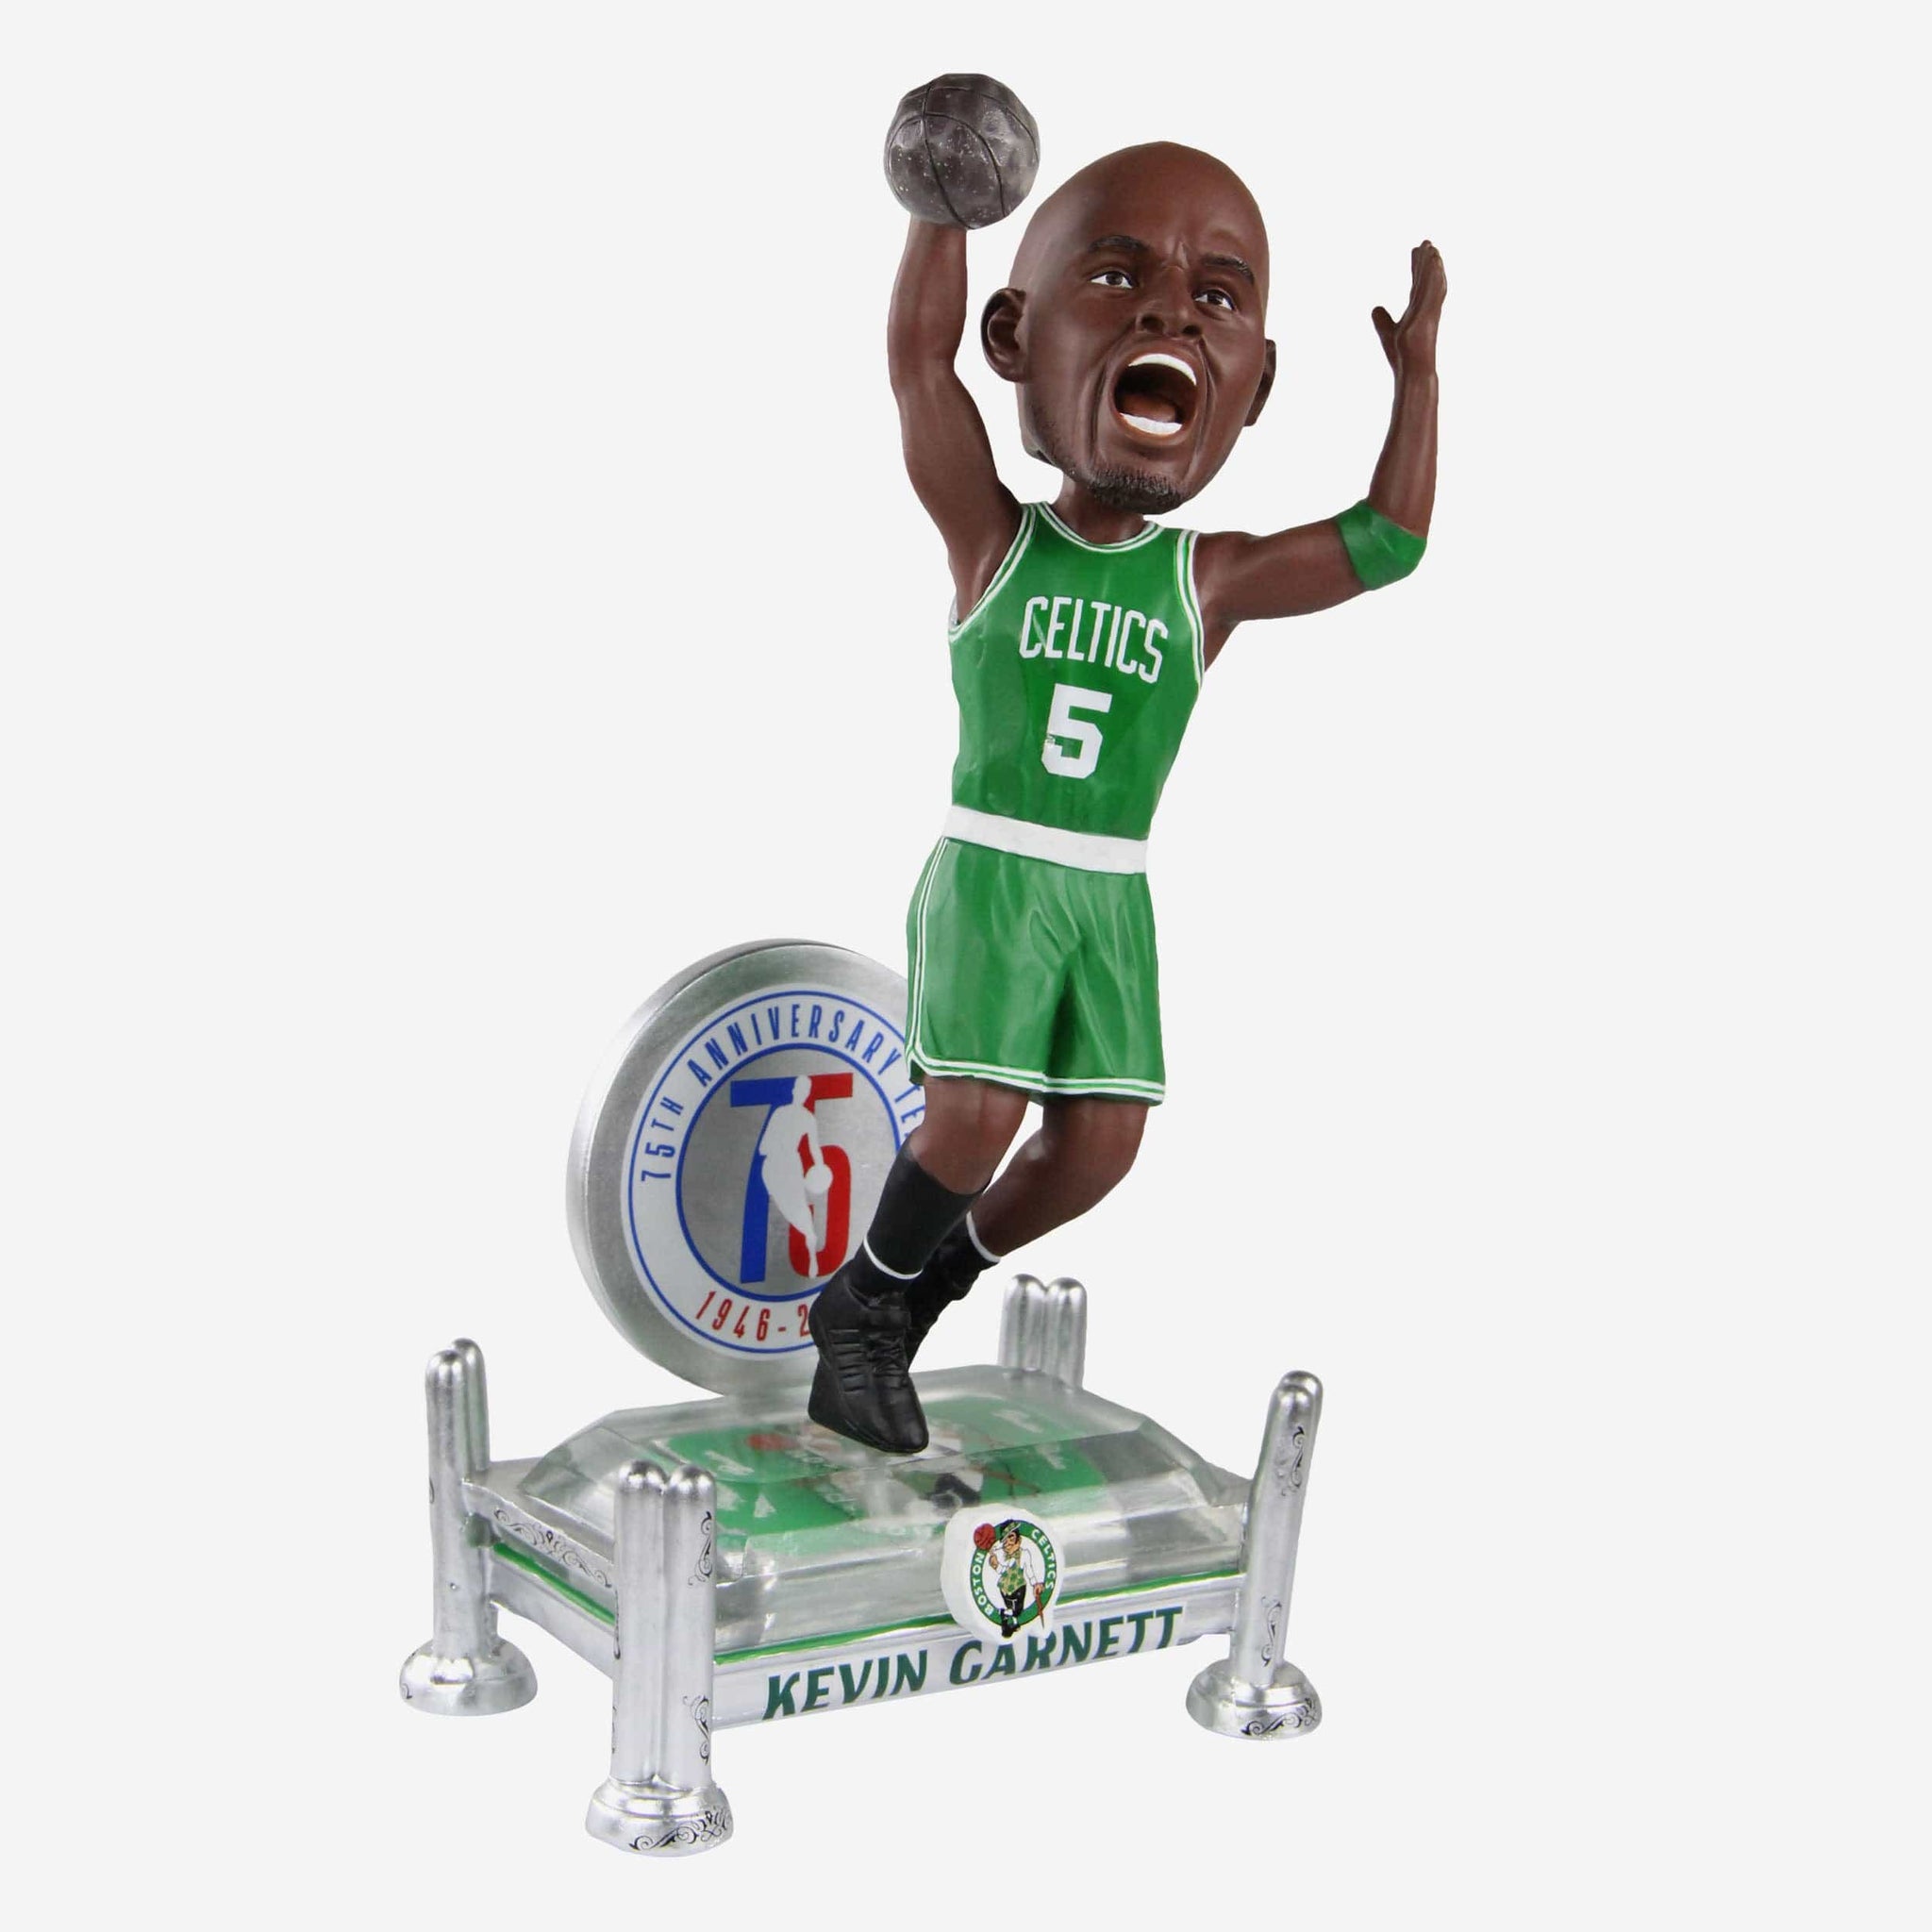 Boston Celtics: Thank You, Kevin Garnett